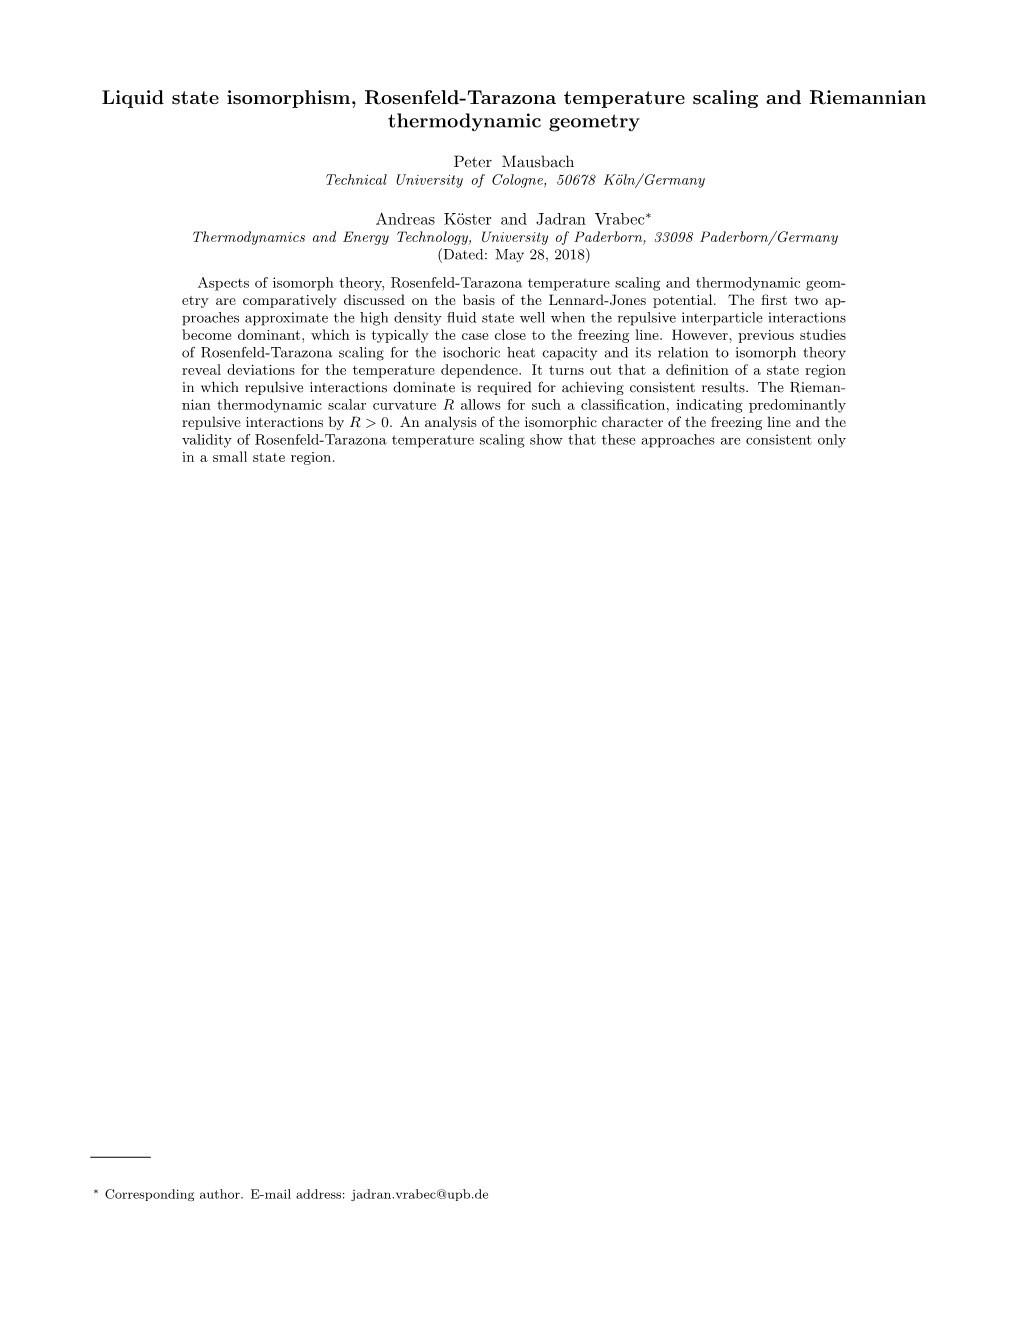 Liquid State Isomorphism, Rosenfeld-Tarazona Temperature Scaling and Riemannian Thermodynamic Geometry